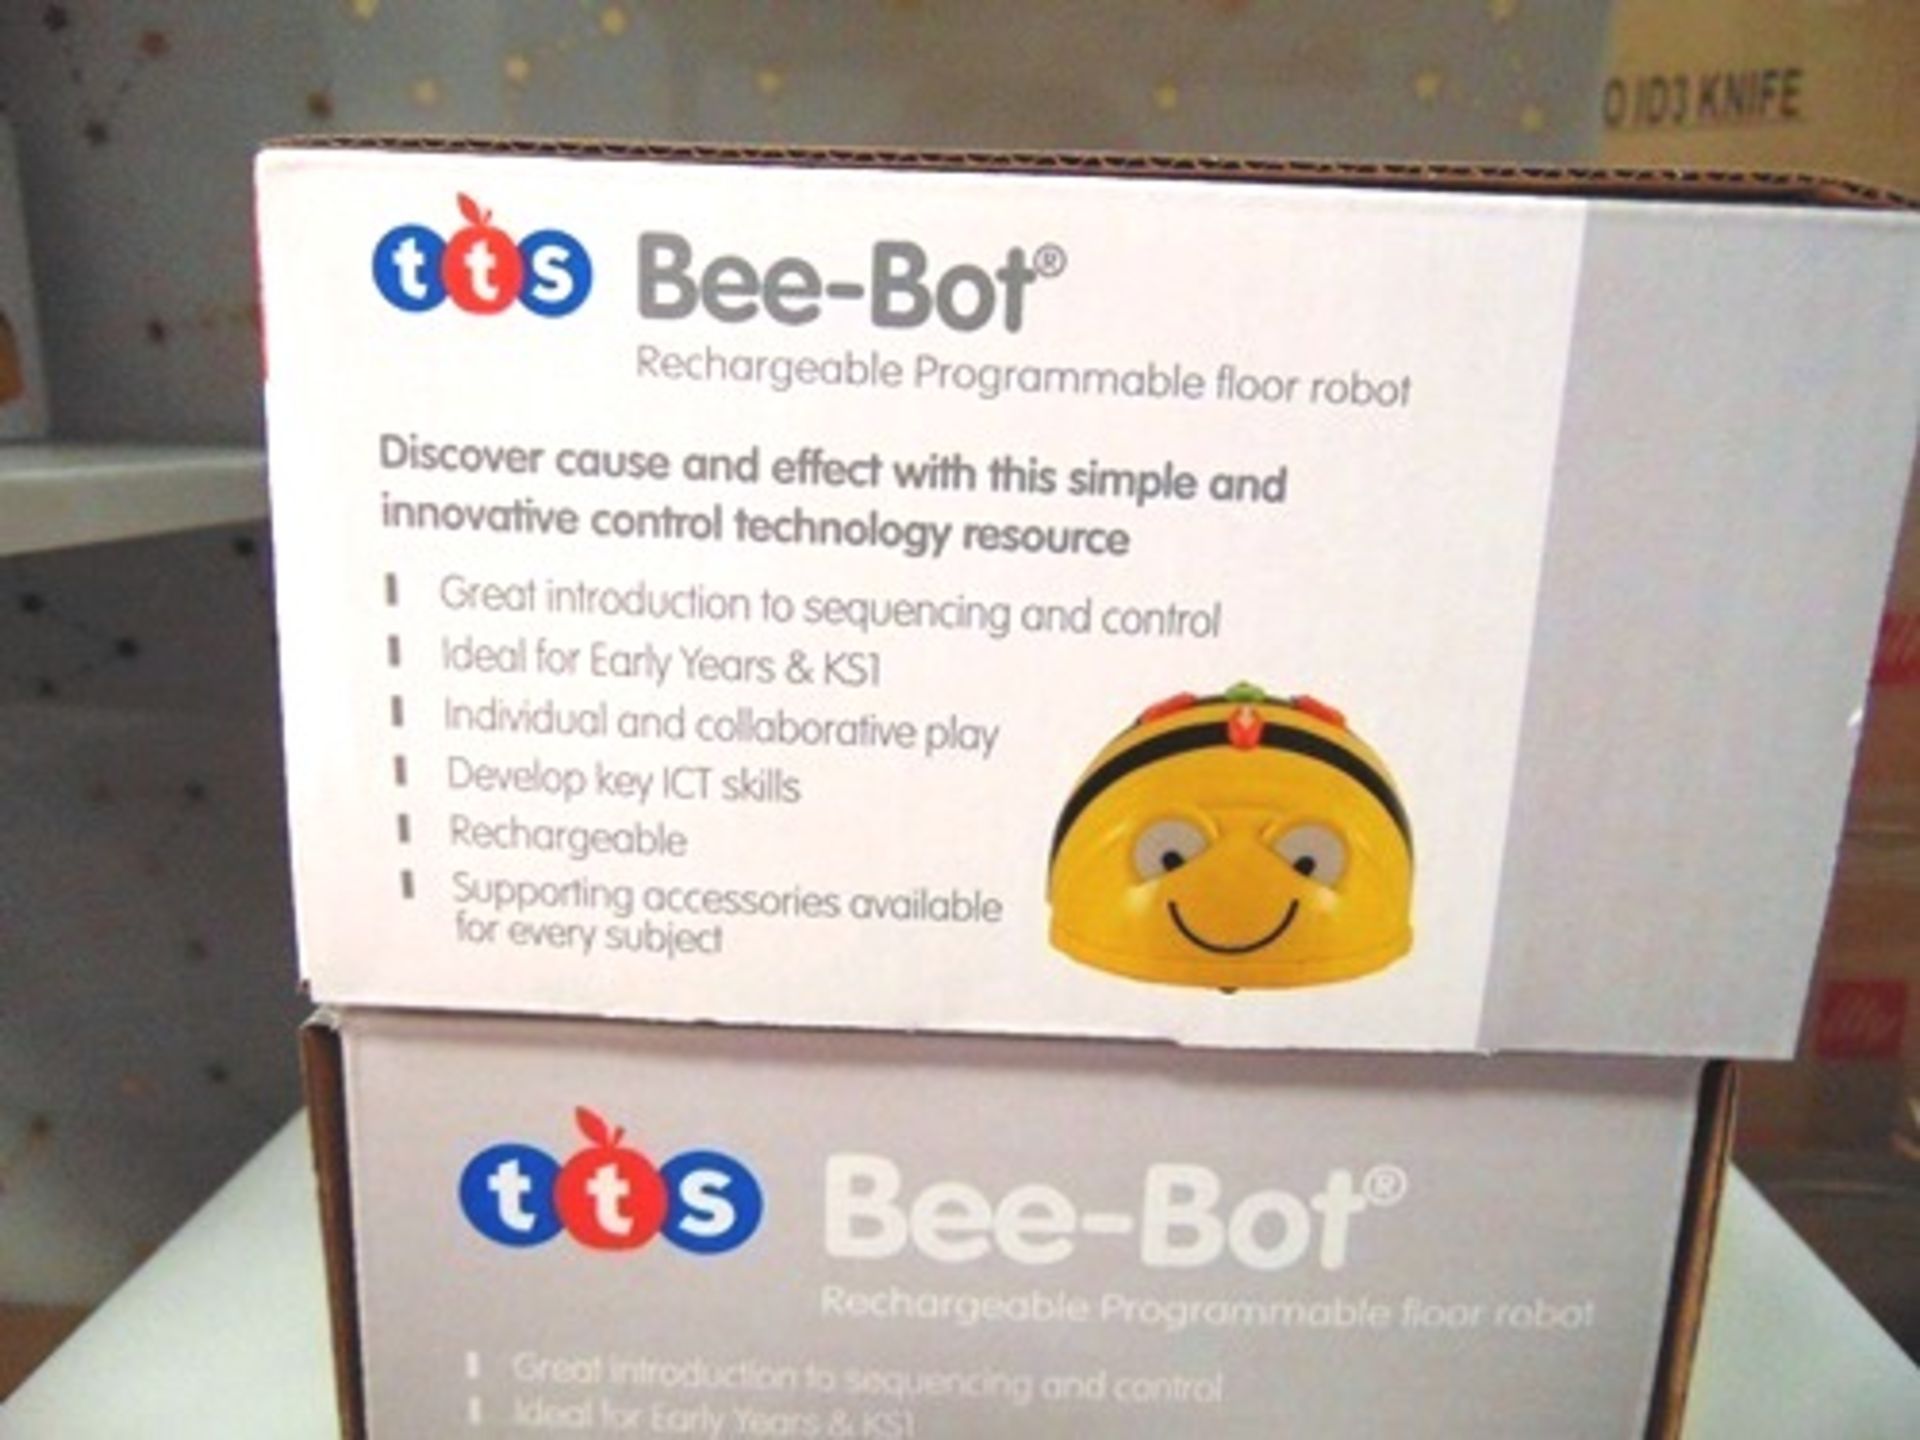 2 x TTS Bee-Bot programmable floor robots, product code IT10077 - New (C15tab) - Image 2 of 2